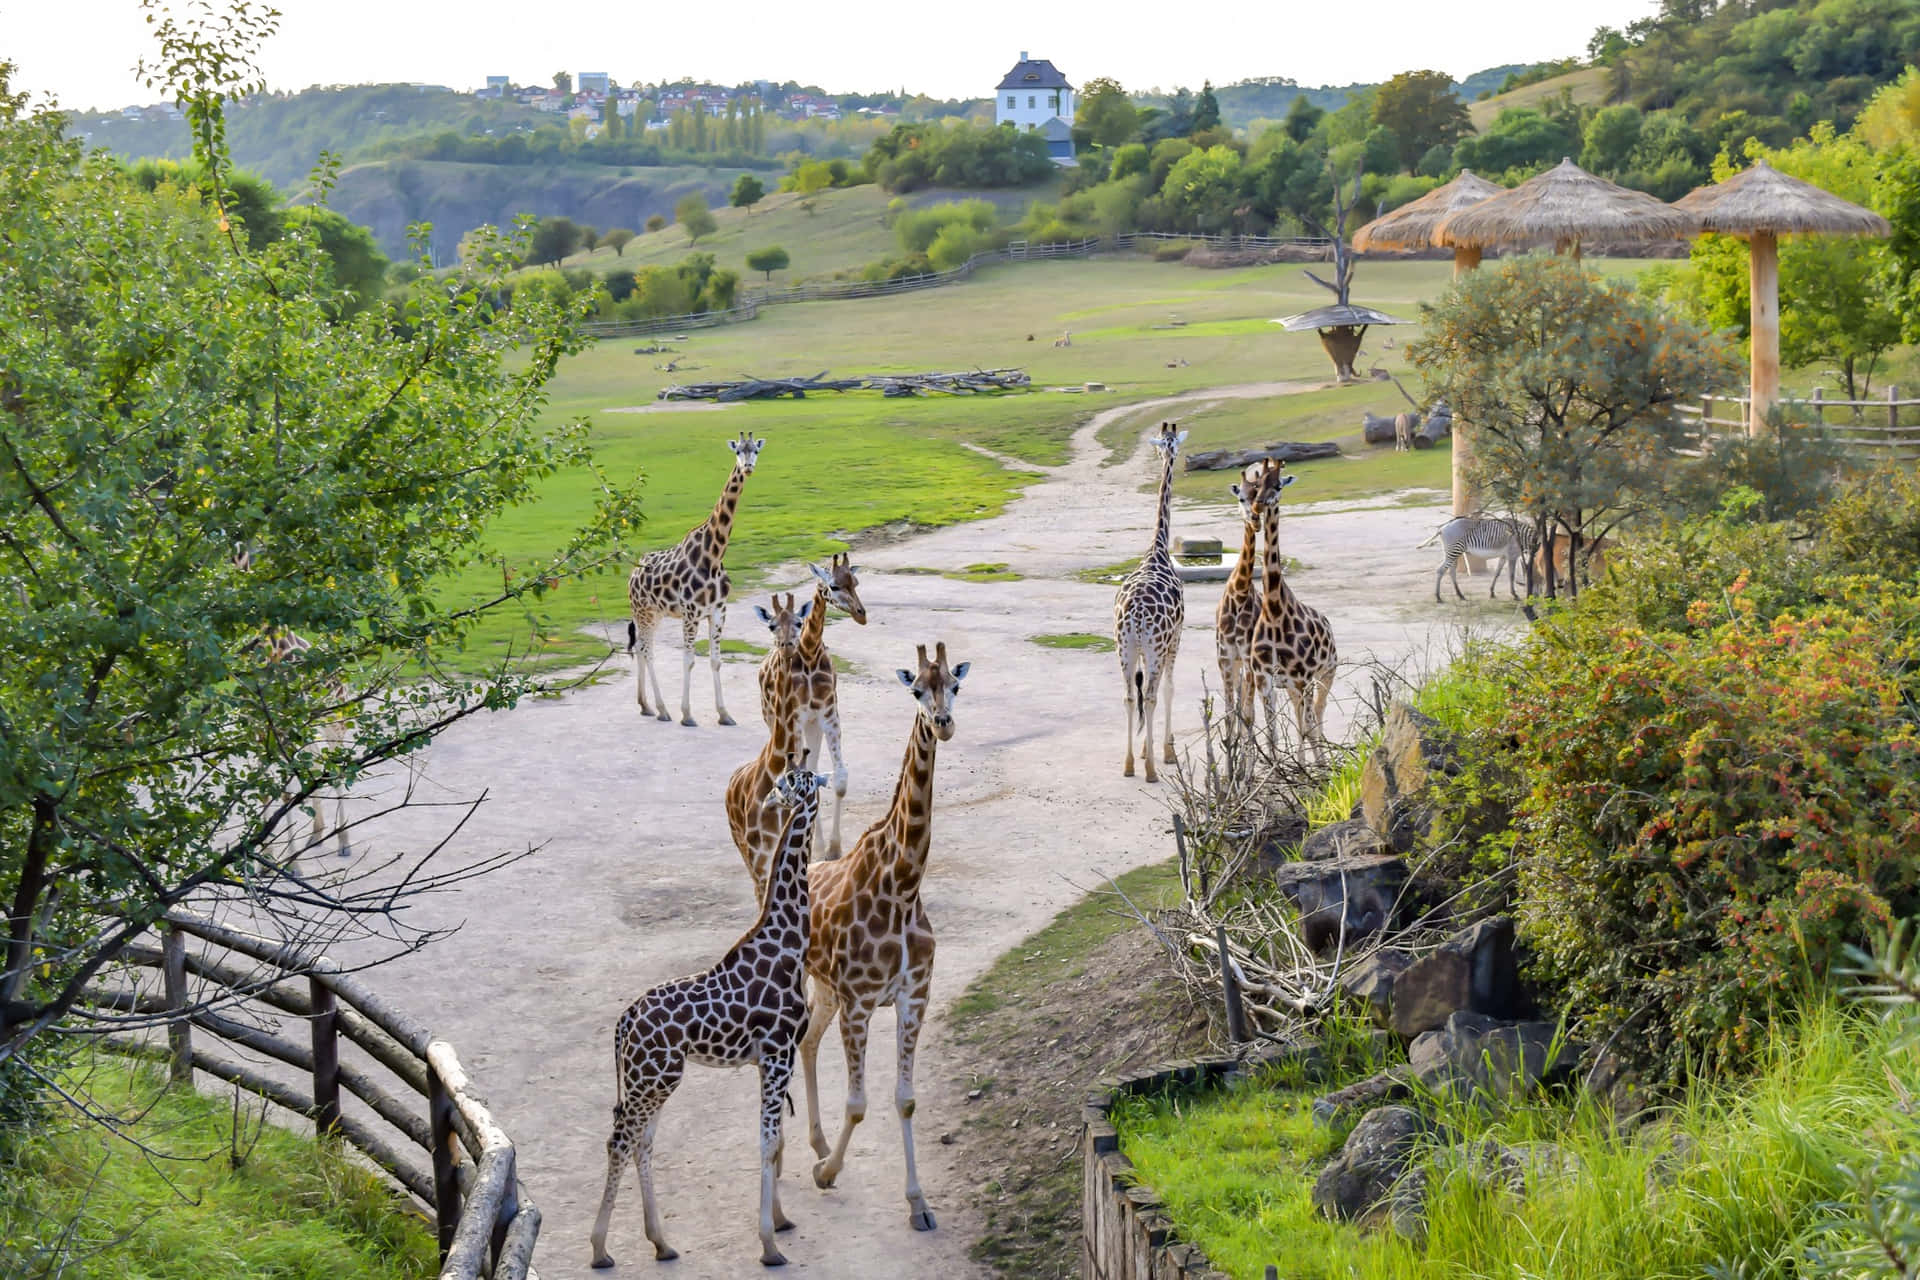 Majestic Giraffes At The Prague Zoo